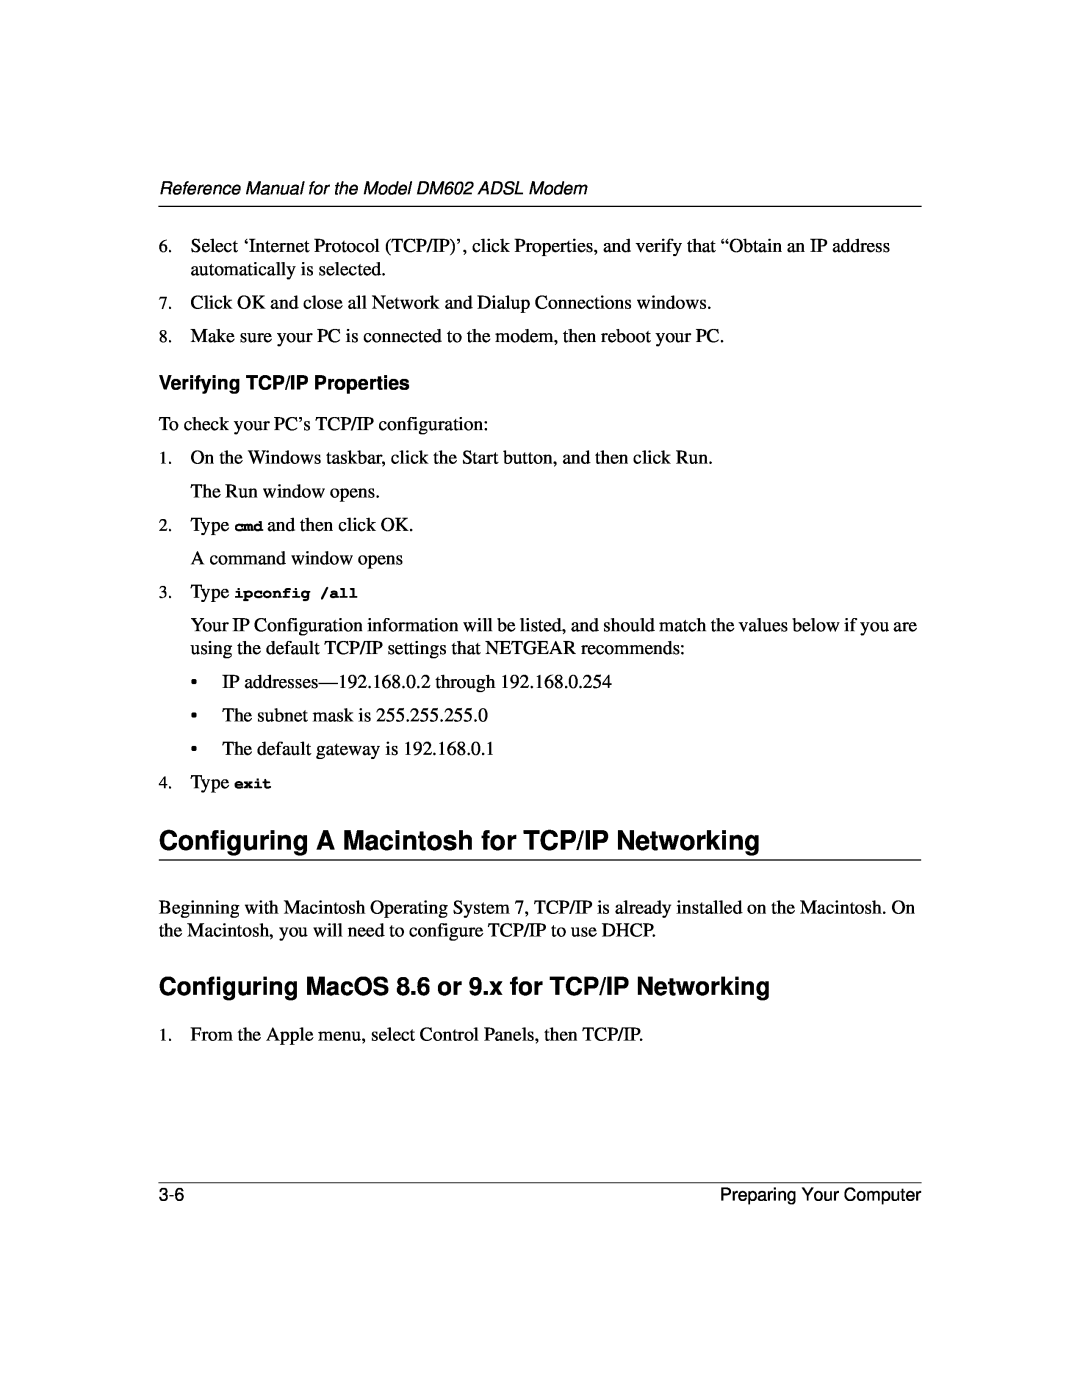 NETGEAR DM602 manual Configuring A Macintosh for TCP/IP Networking, Configuring MacOS 8.6 or 9.x for TCP/IP Networking 